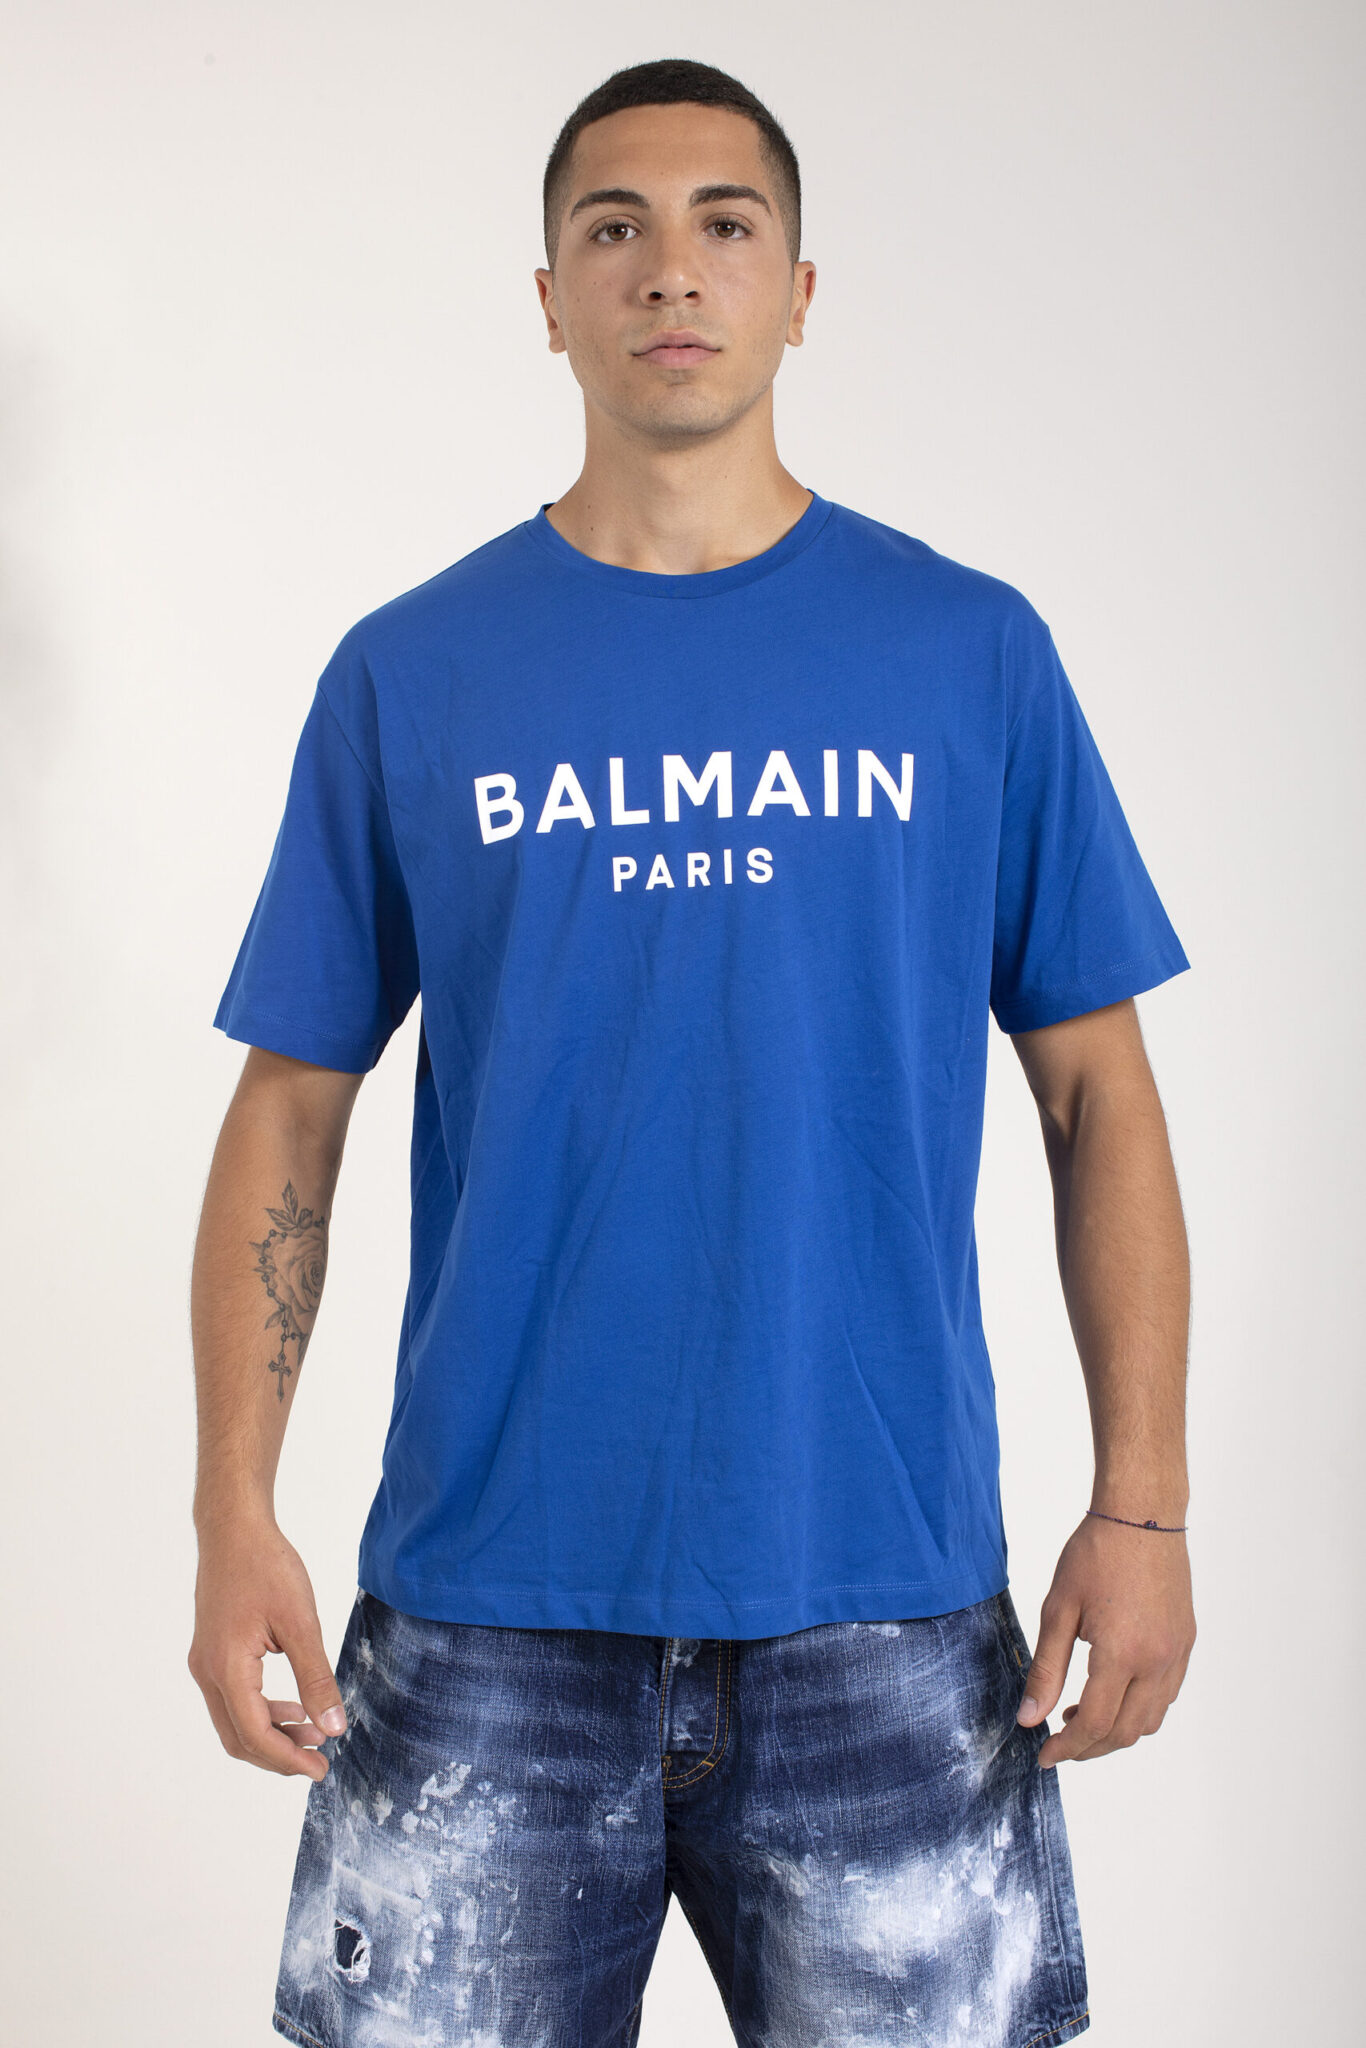 Balmain Paris t shirt con stampa logo